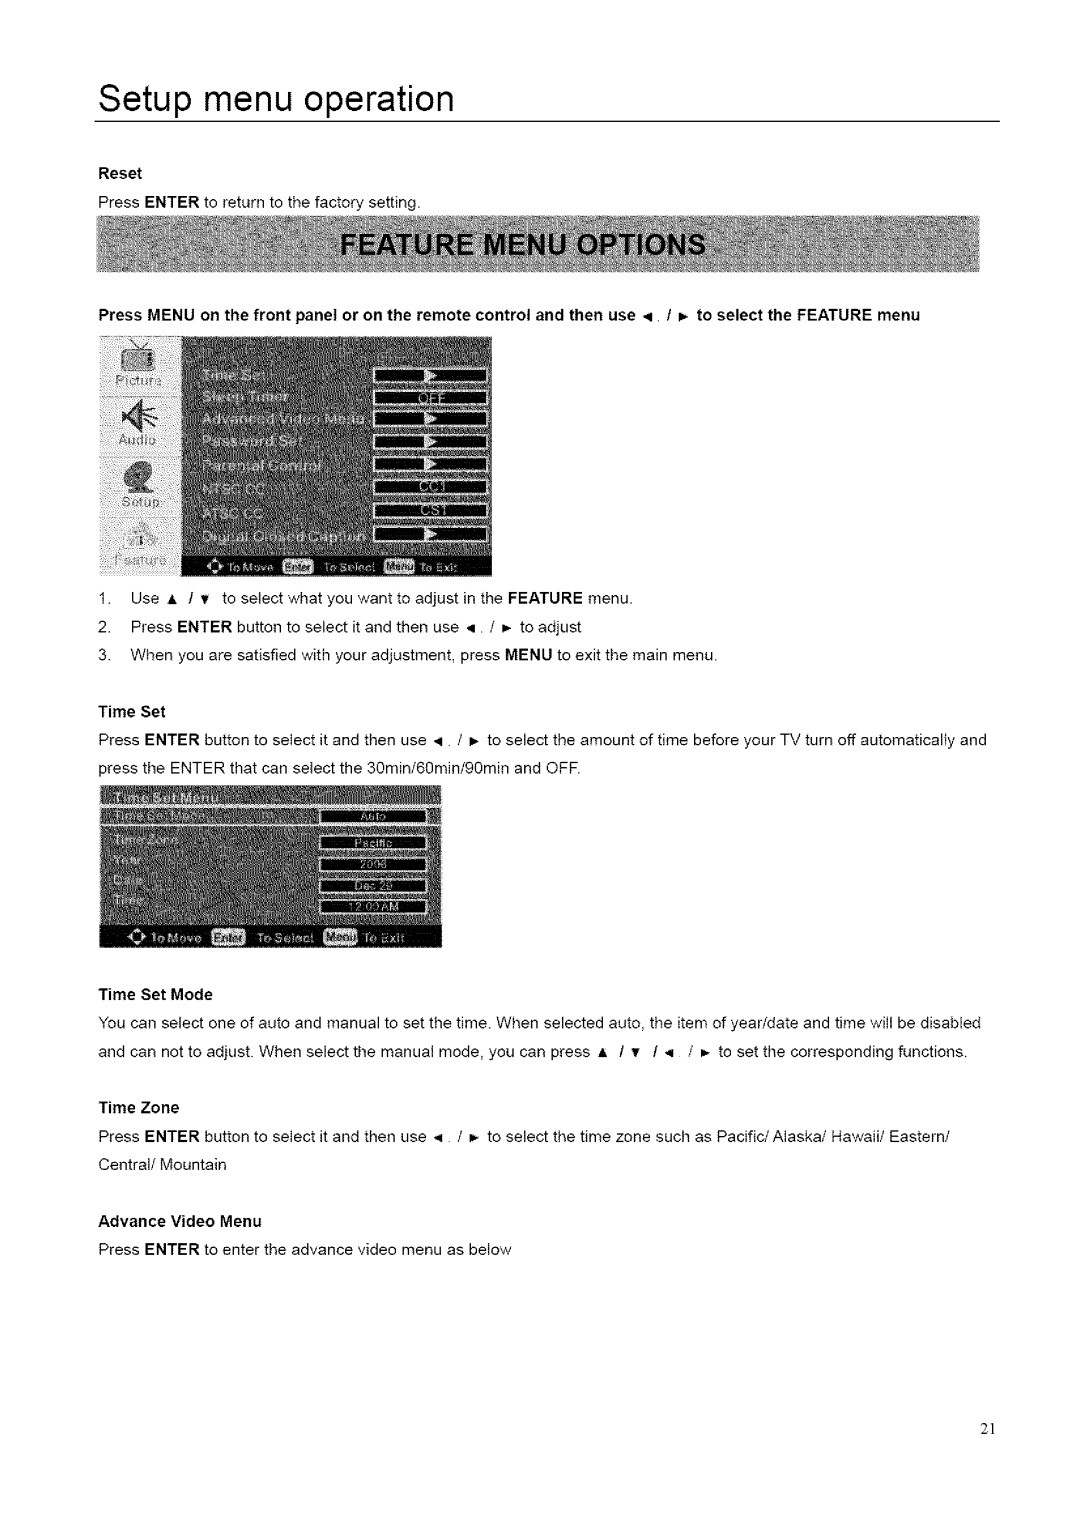 ProScan 32LB30QD, 26LB30QD instruction manual Setup menu operation, Reset, Time Set Mode 